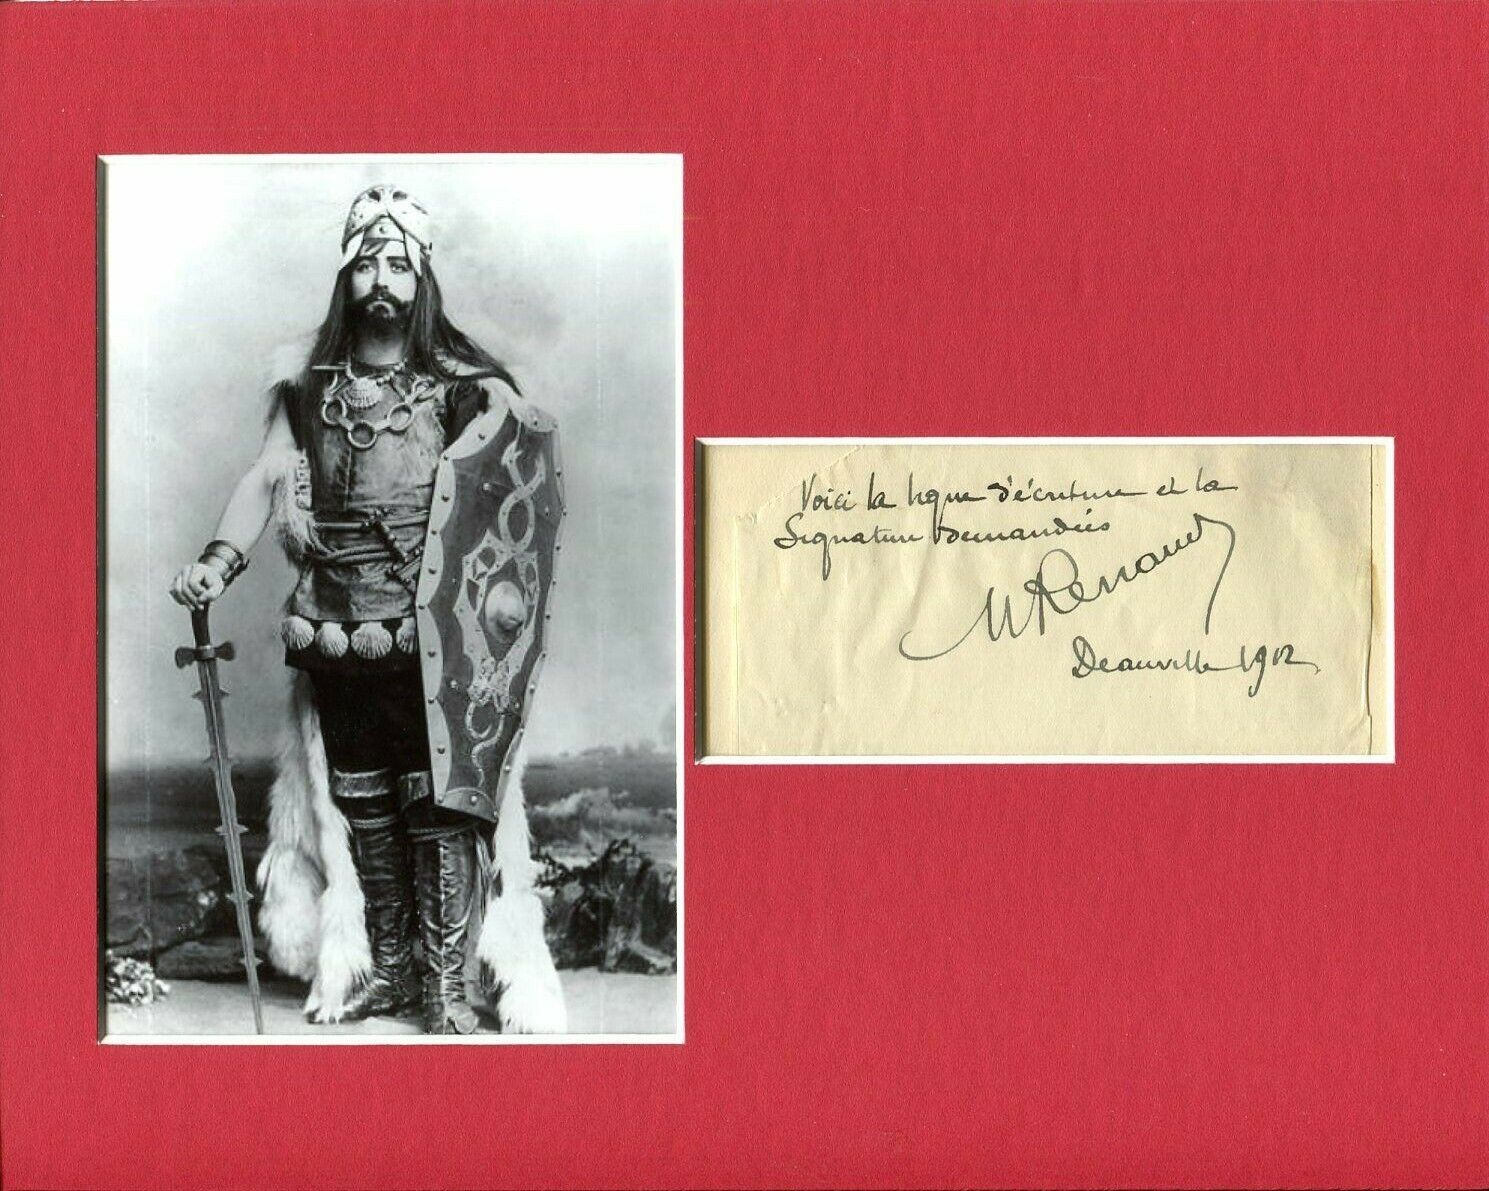 Maurice Renaud French Opera Baritone Singer Rare Signed Autograph Photo Display